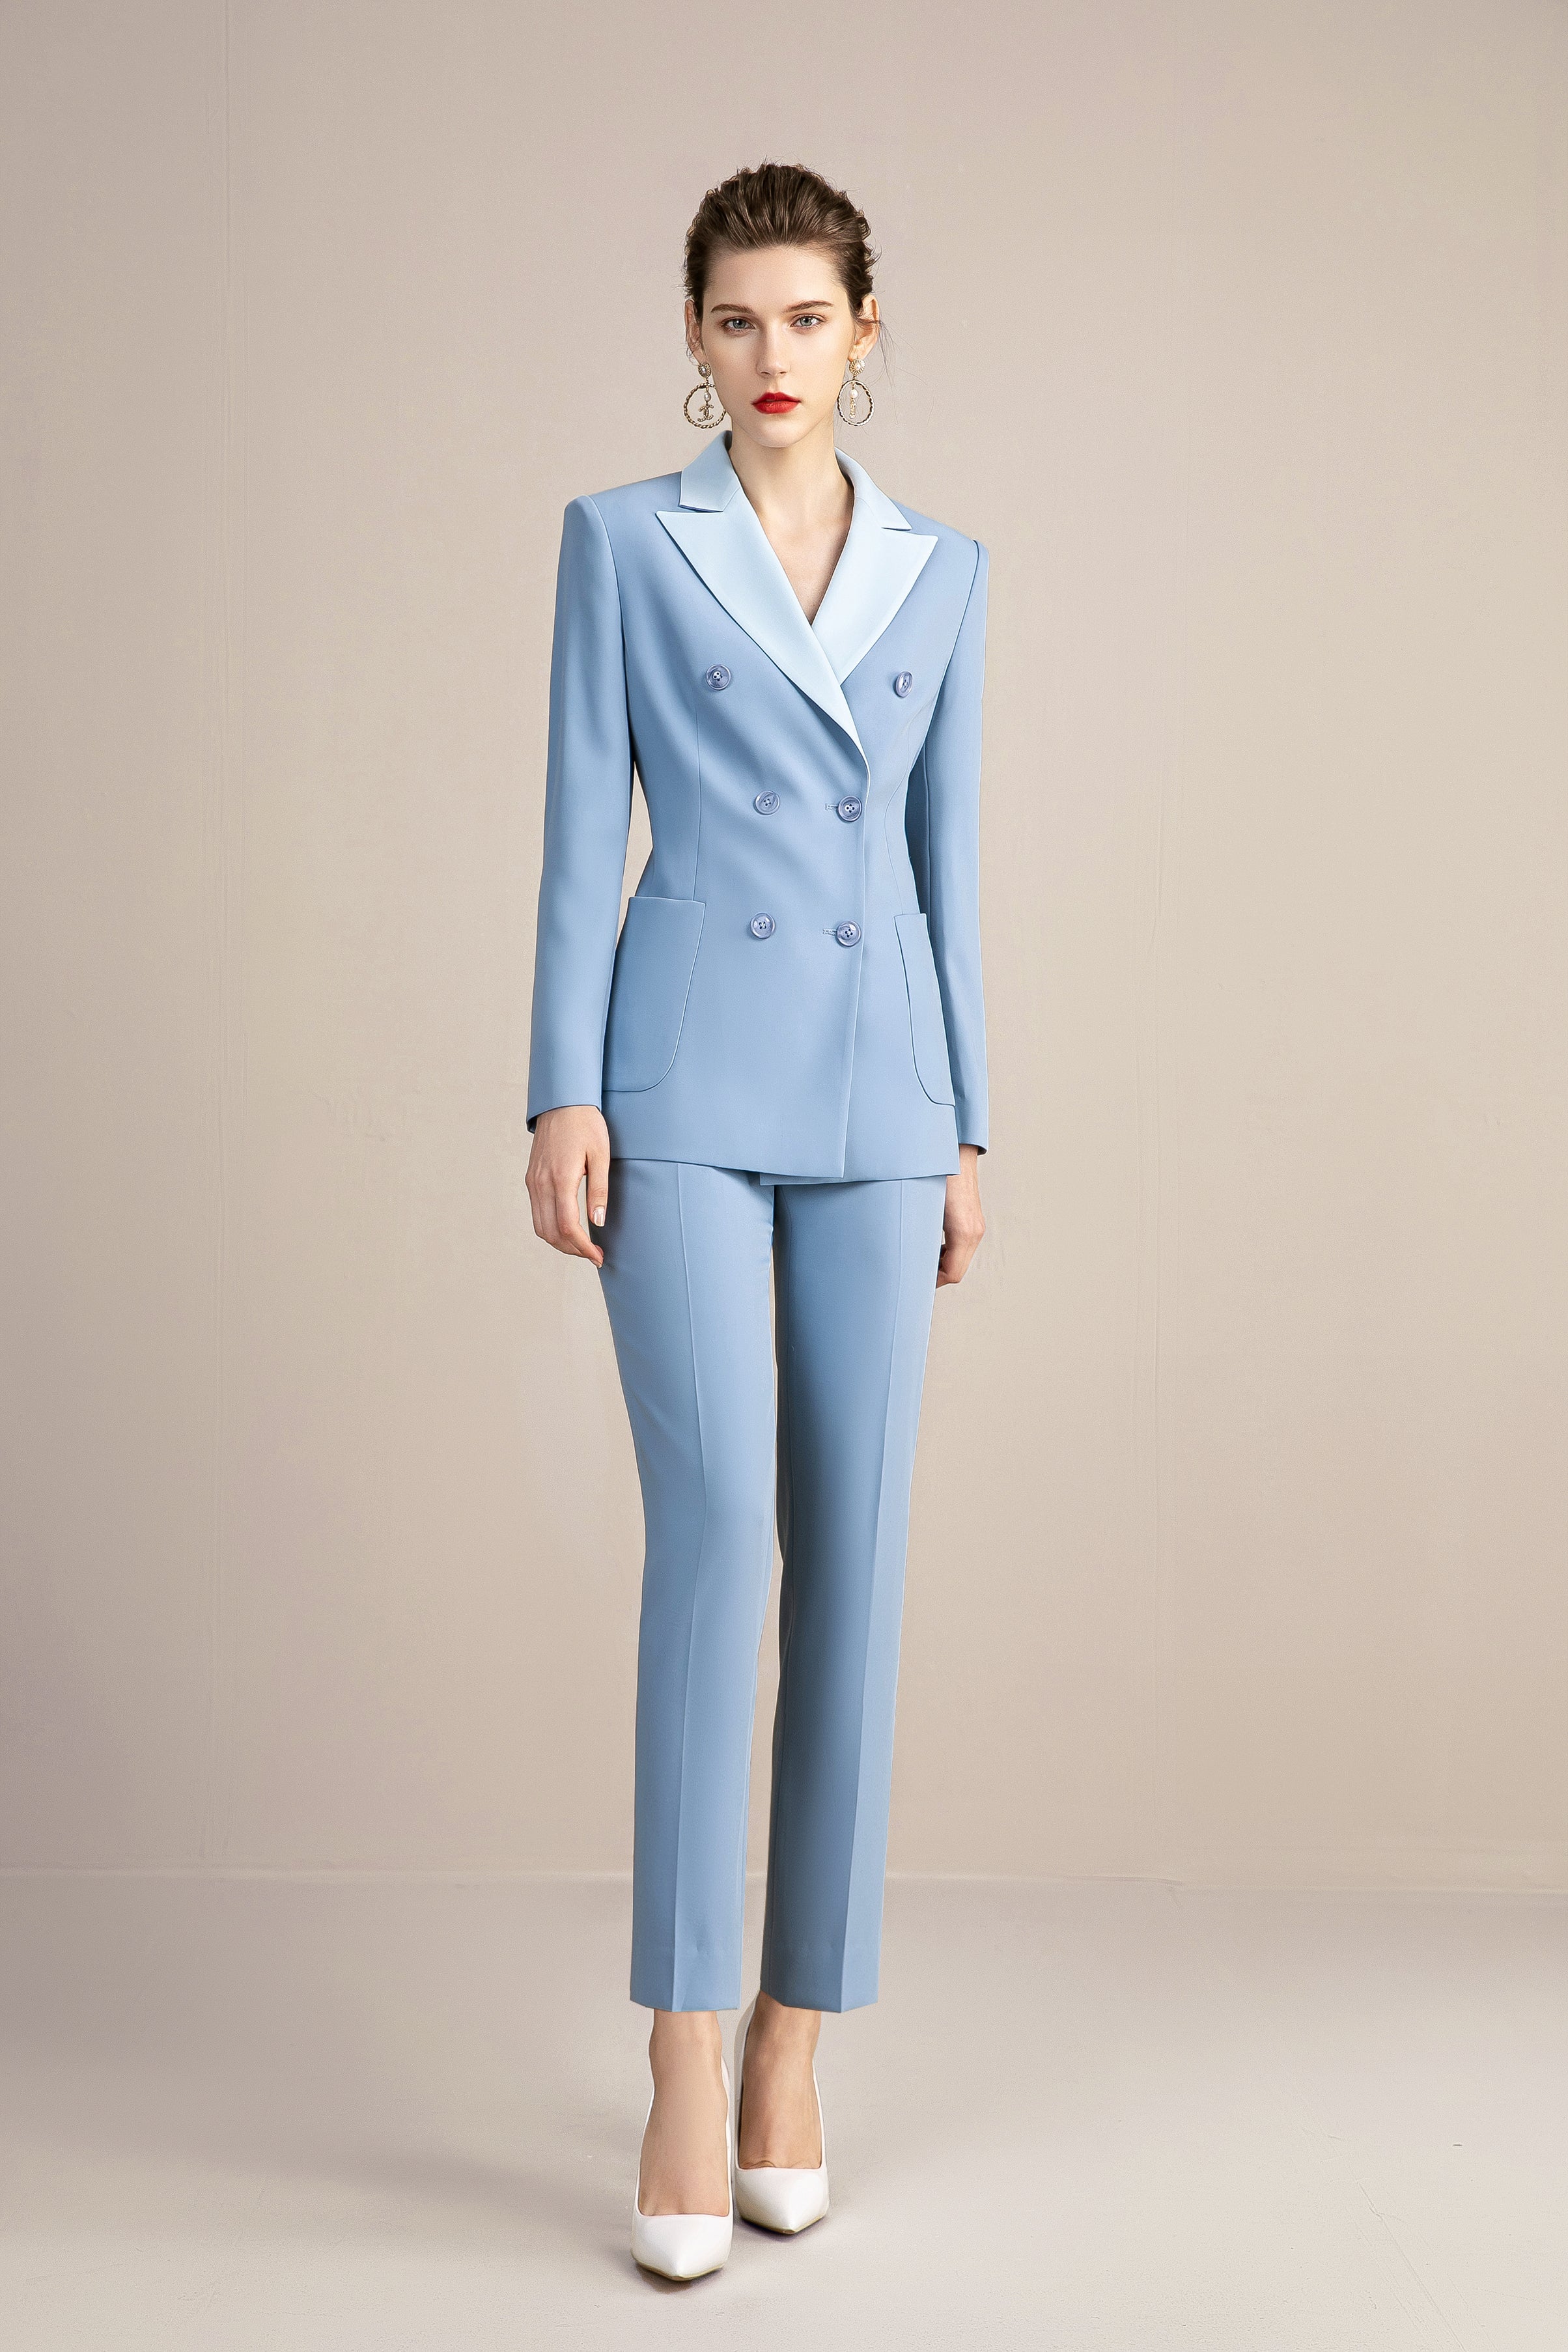 Blue Formal Tuxedo Pant suit - FashionByTeresa